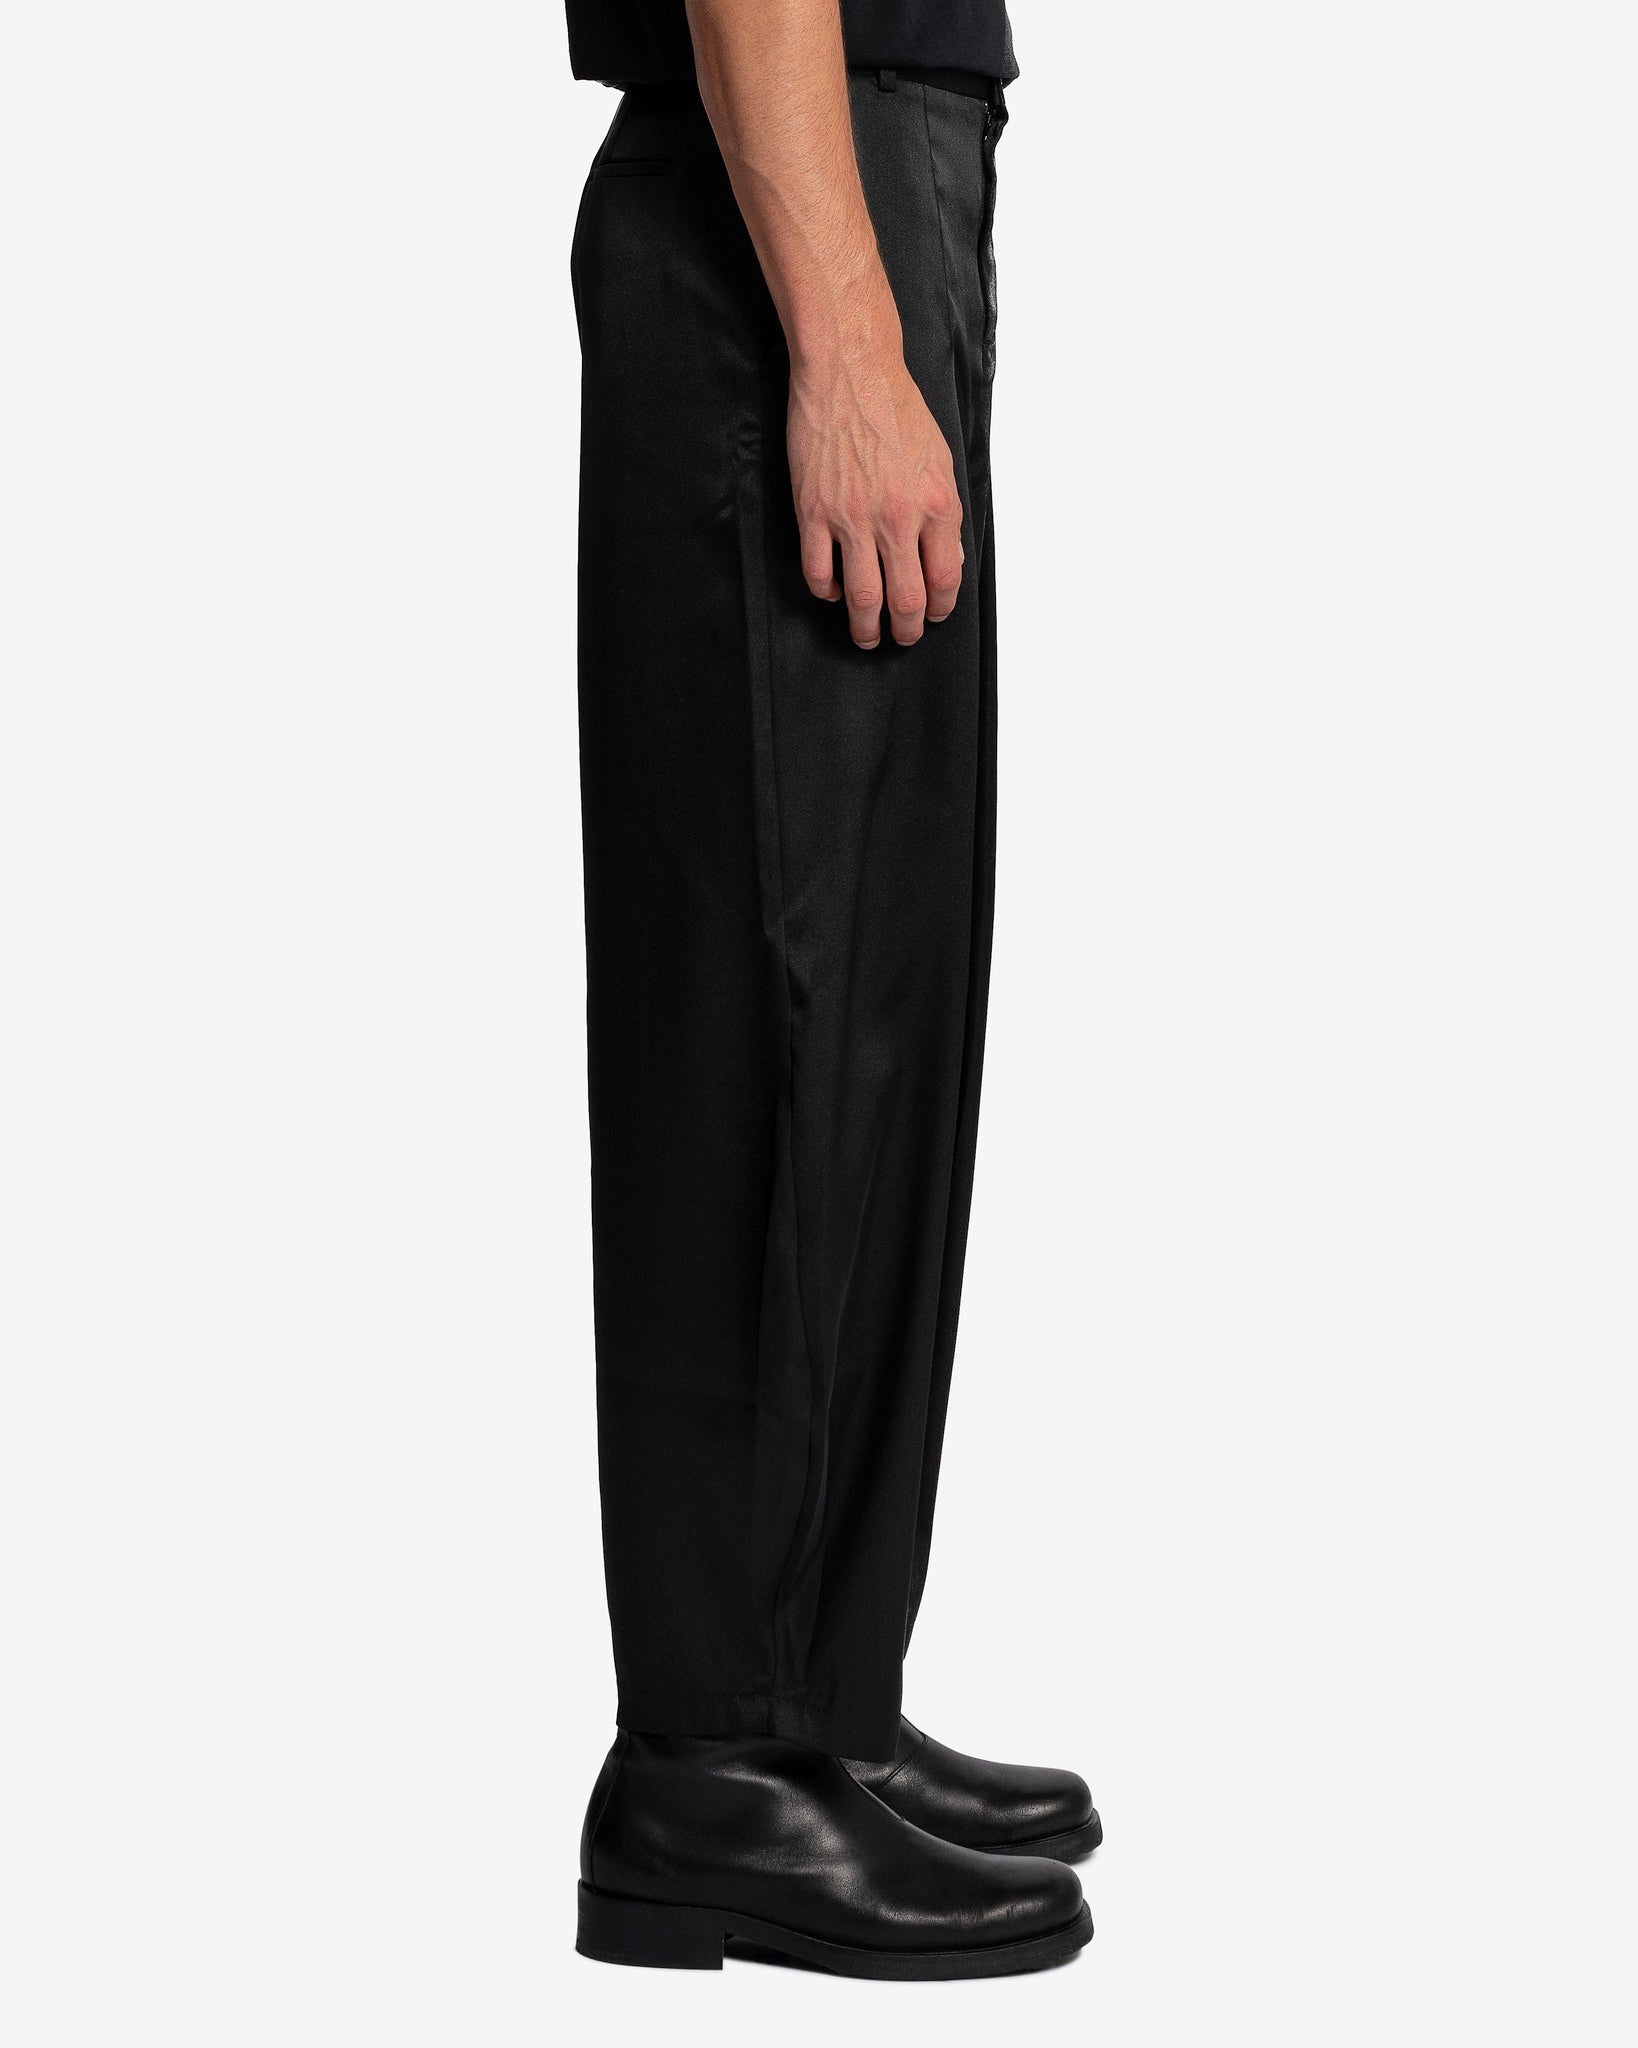 Edward Cuming Men's Pants Kickout Drape Trousers in Black